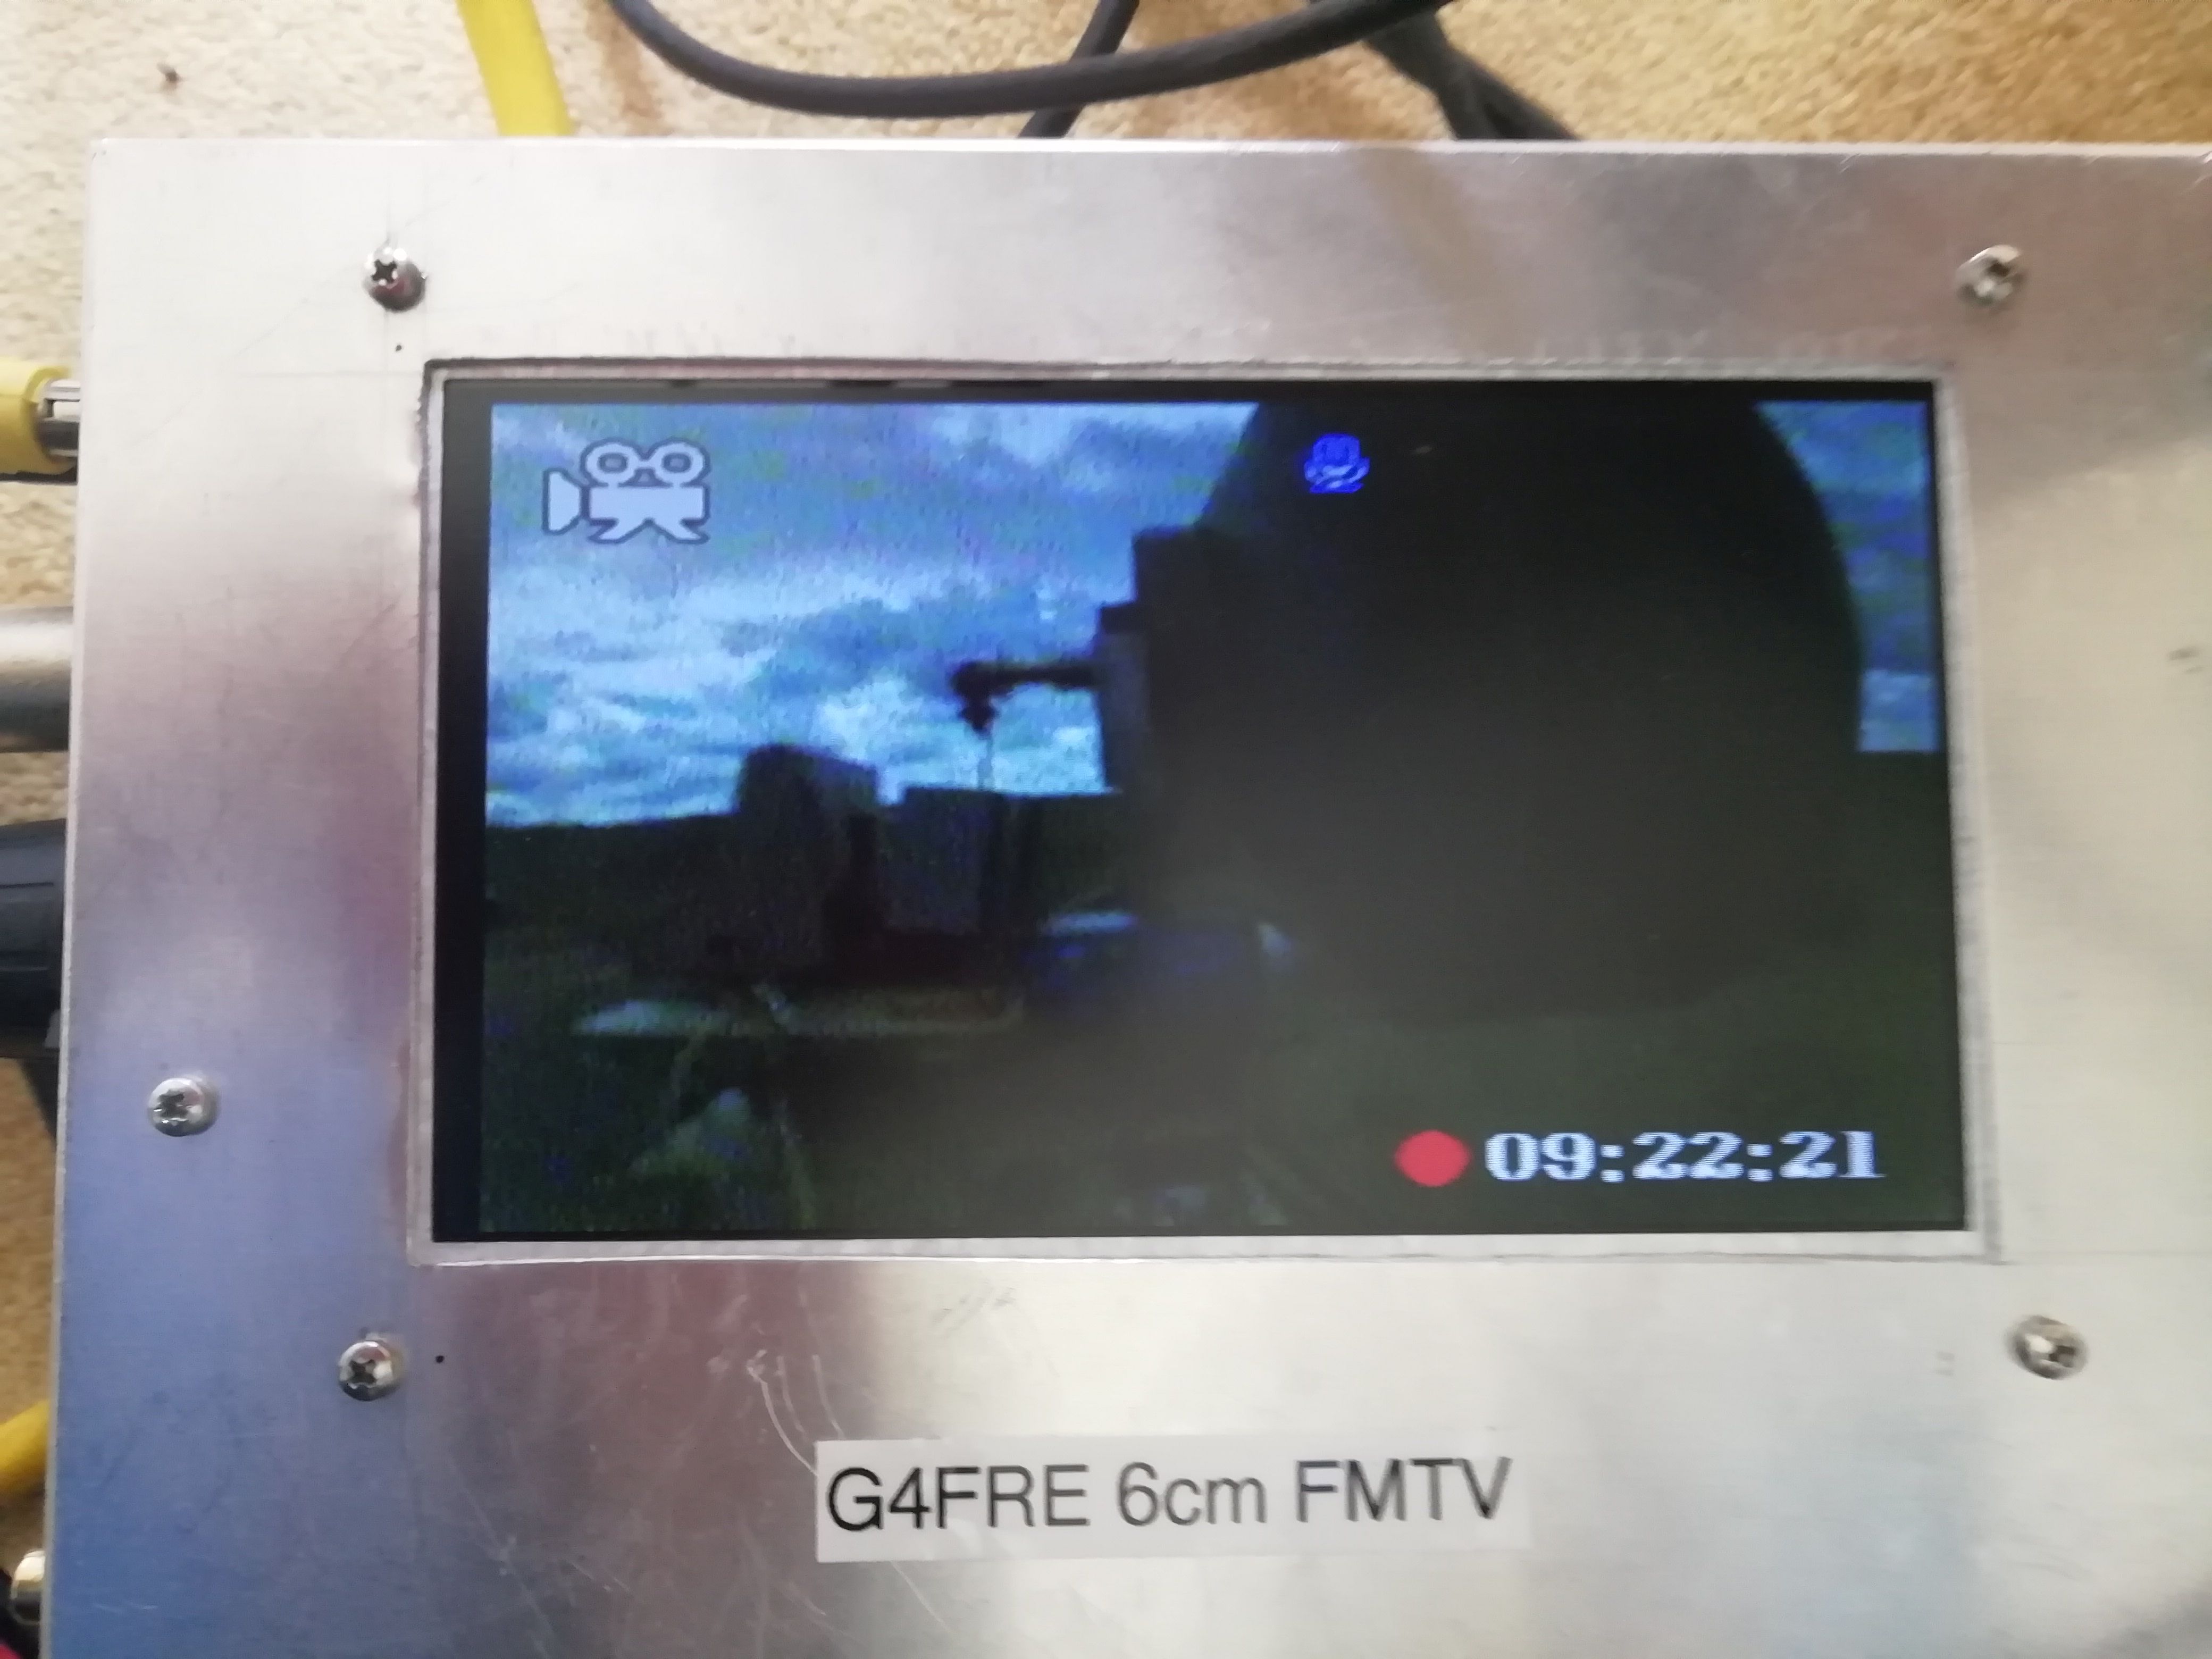 6cm FMTV